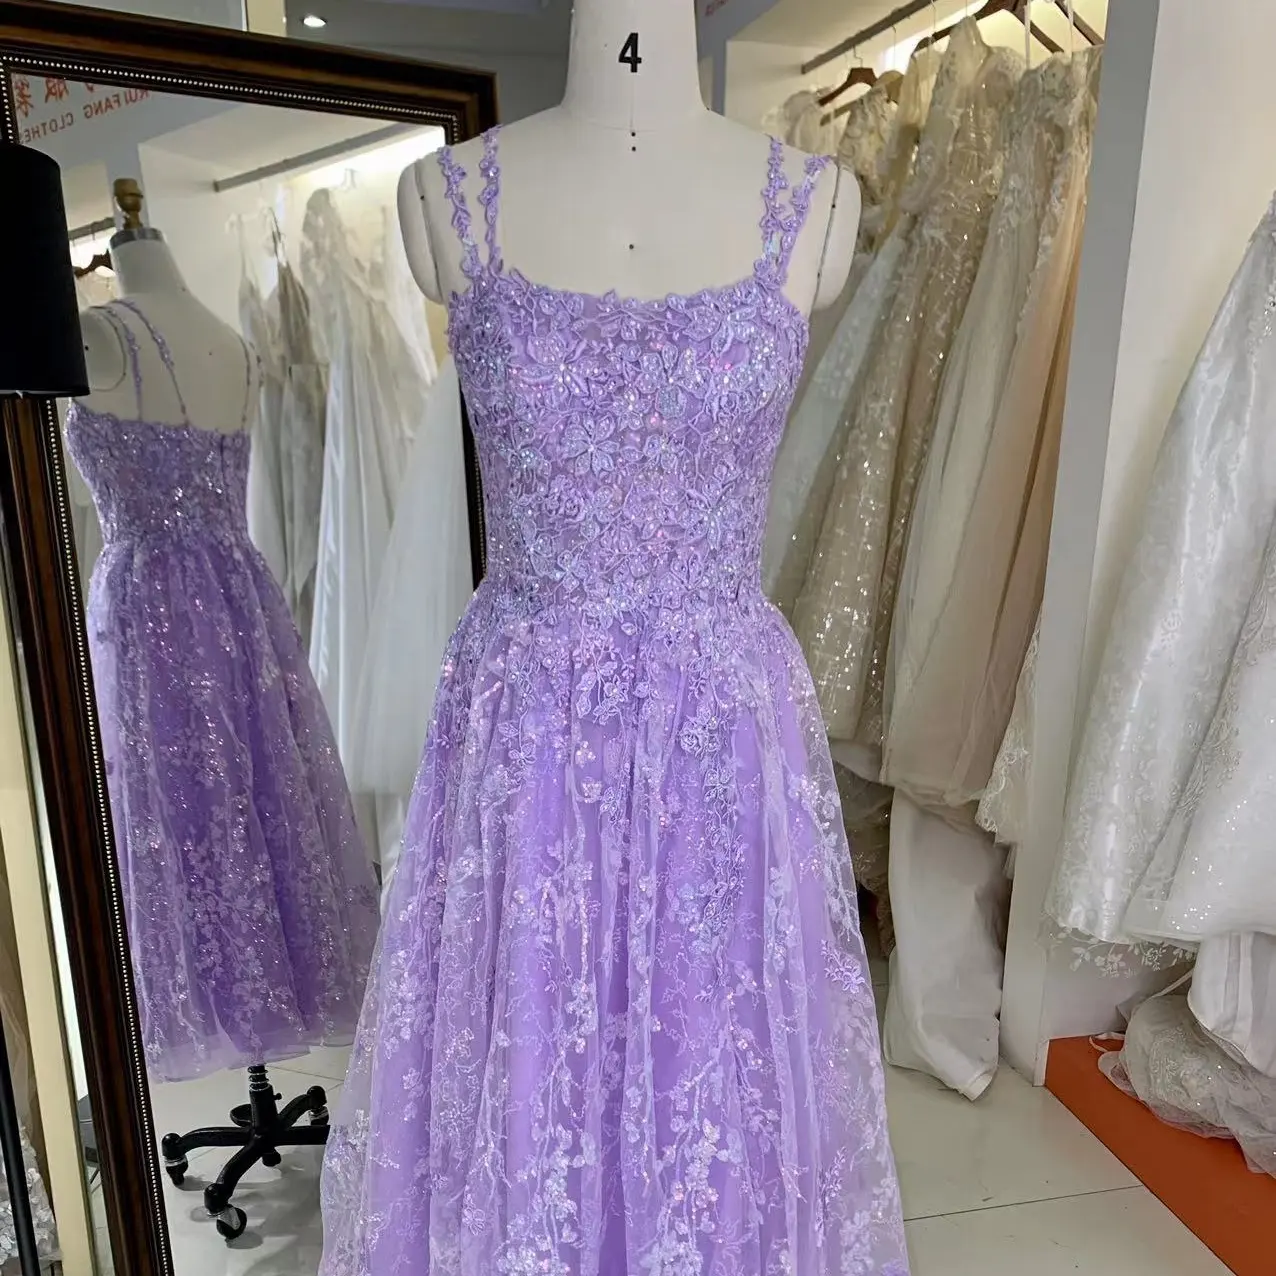 Square Neckline Full Embroidery At Bodice A Line Princess Lace Elegant Midi Length Evening Dress